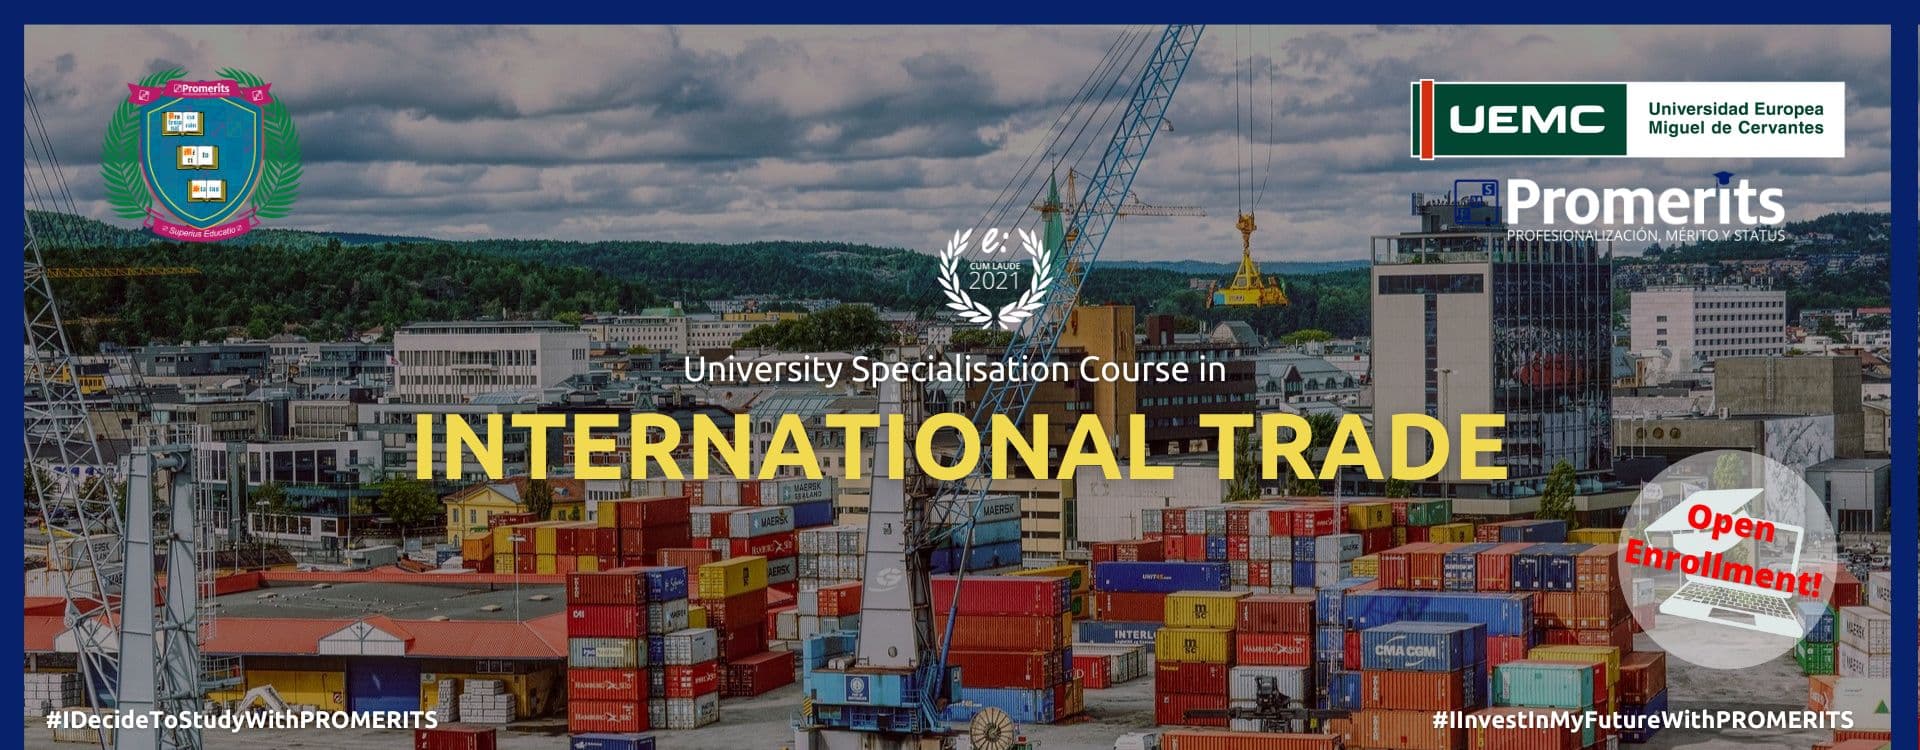 University Specialization Course in International Trade